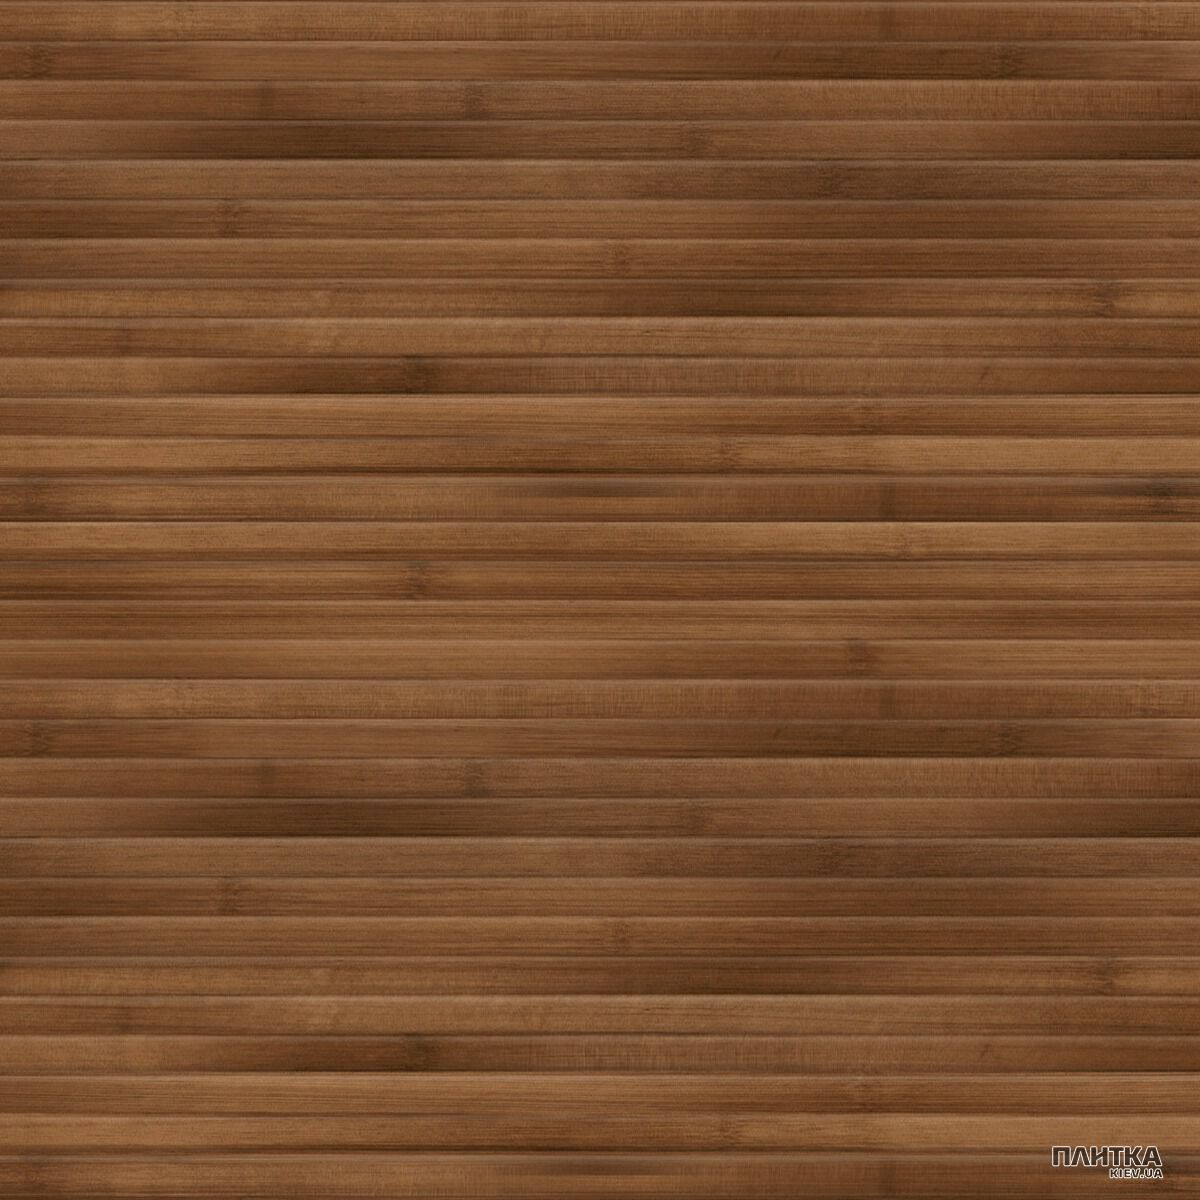 Підлогова плитка Golden Tile Bamboo BAMBOO КОРИЧНЕВИЙ Н77830 коричневий